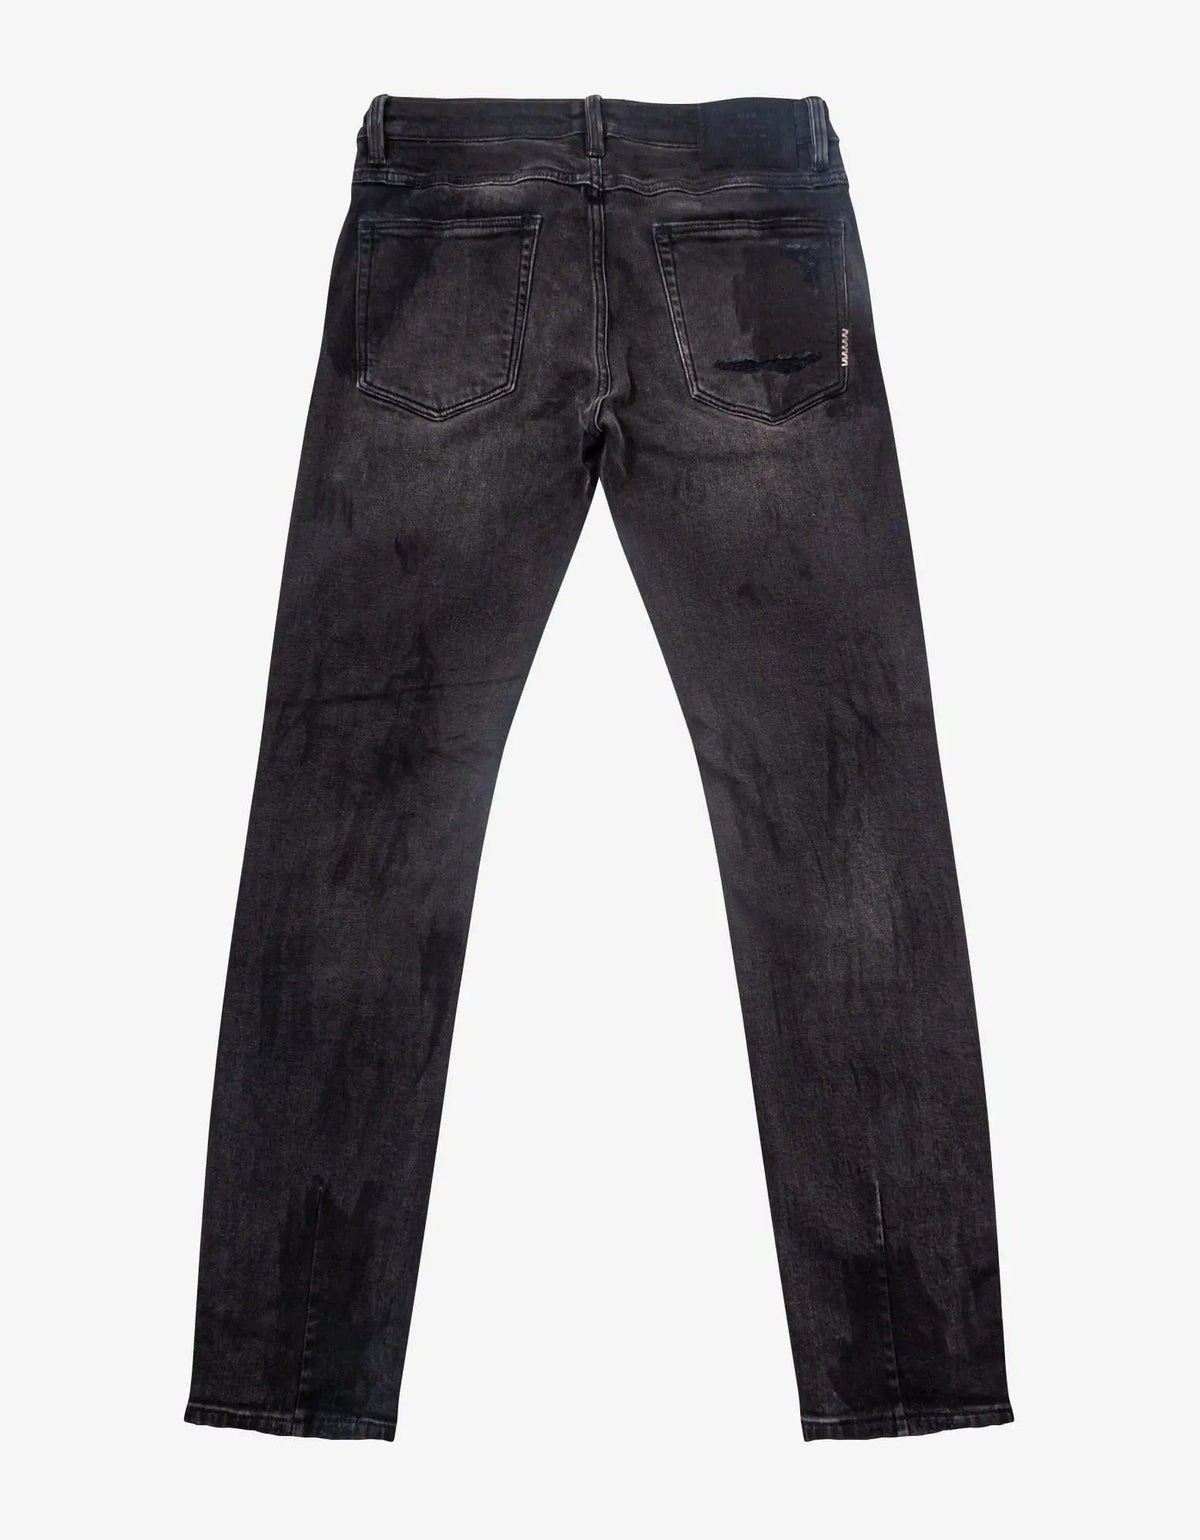 Neuw Neuw Iggy Skinny Brut Black Art Jeans